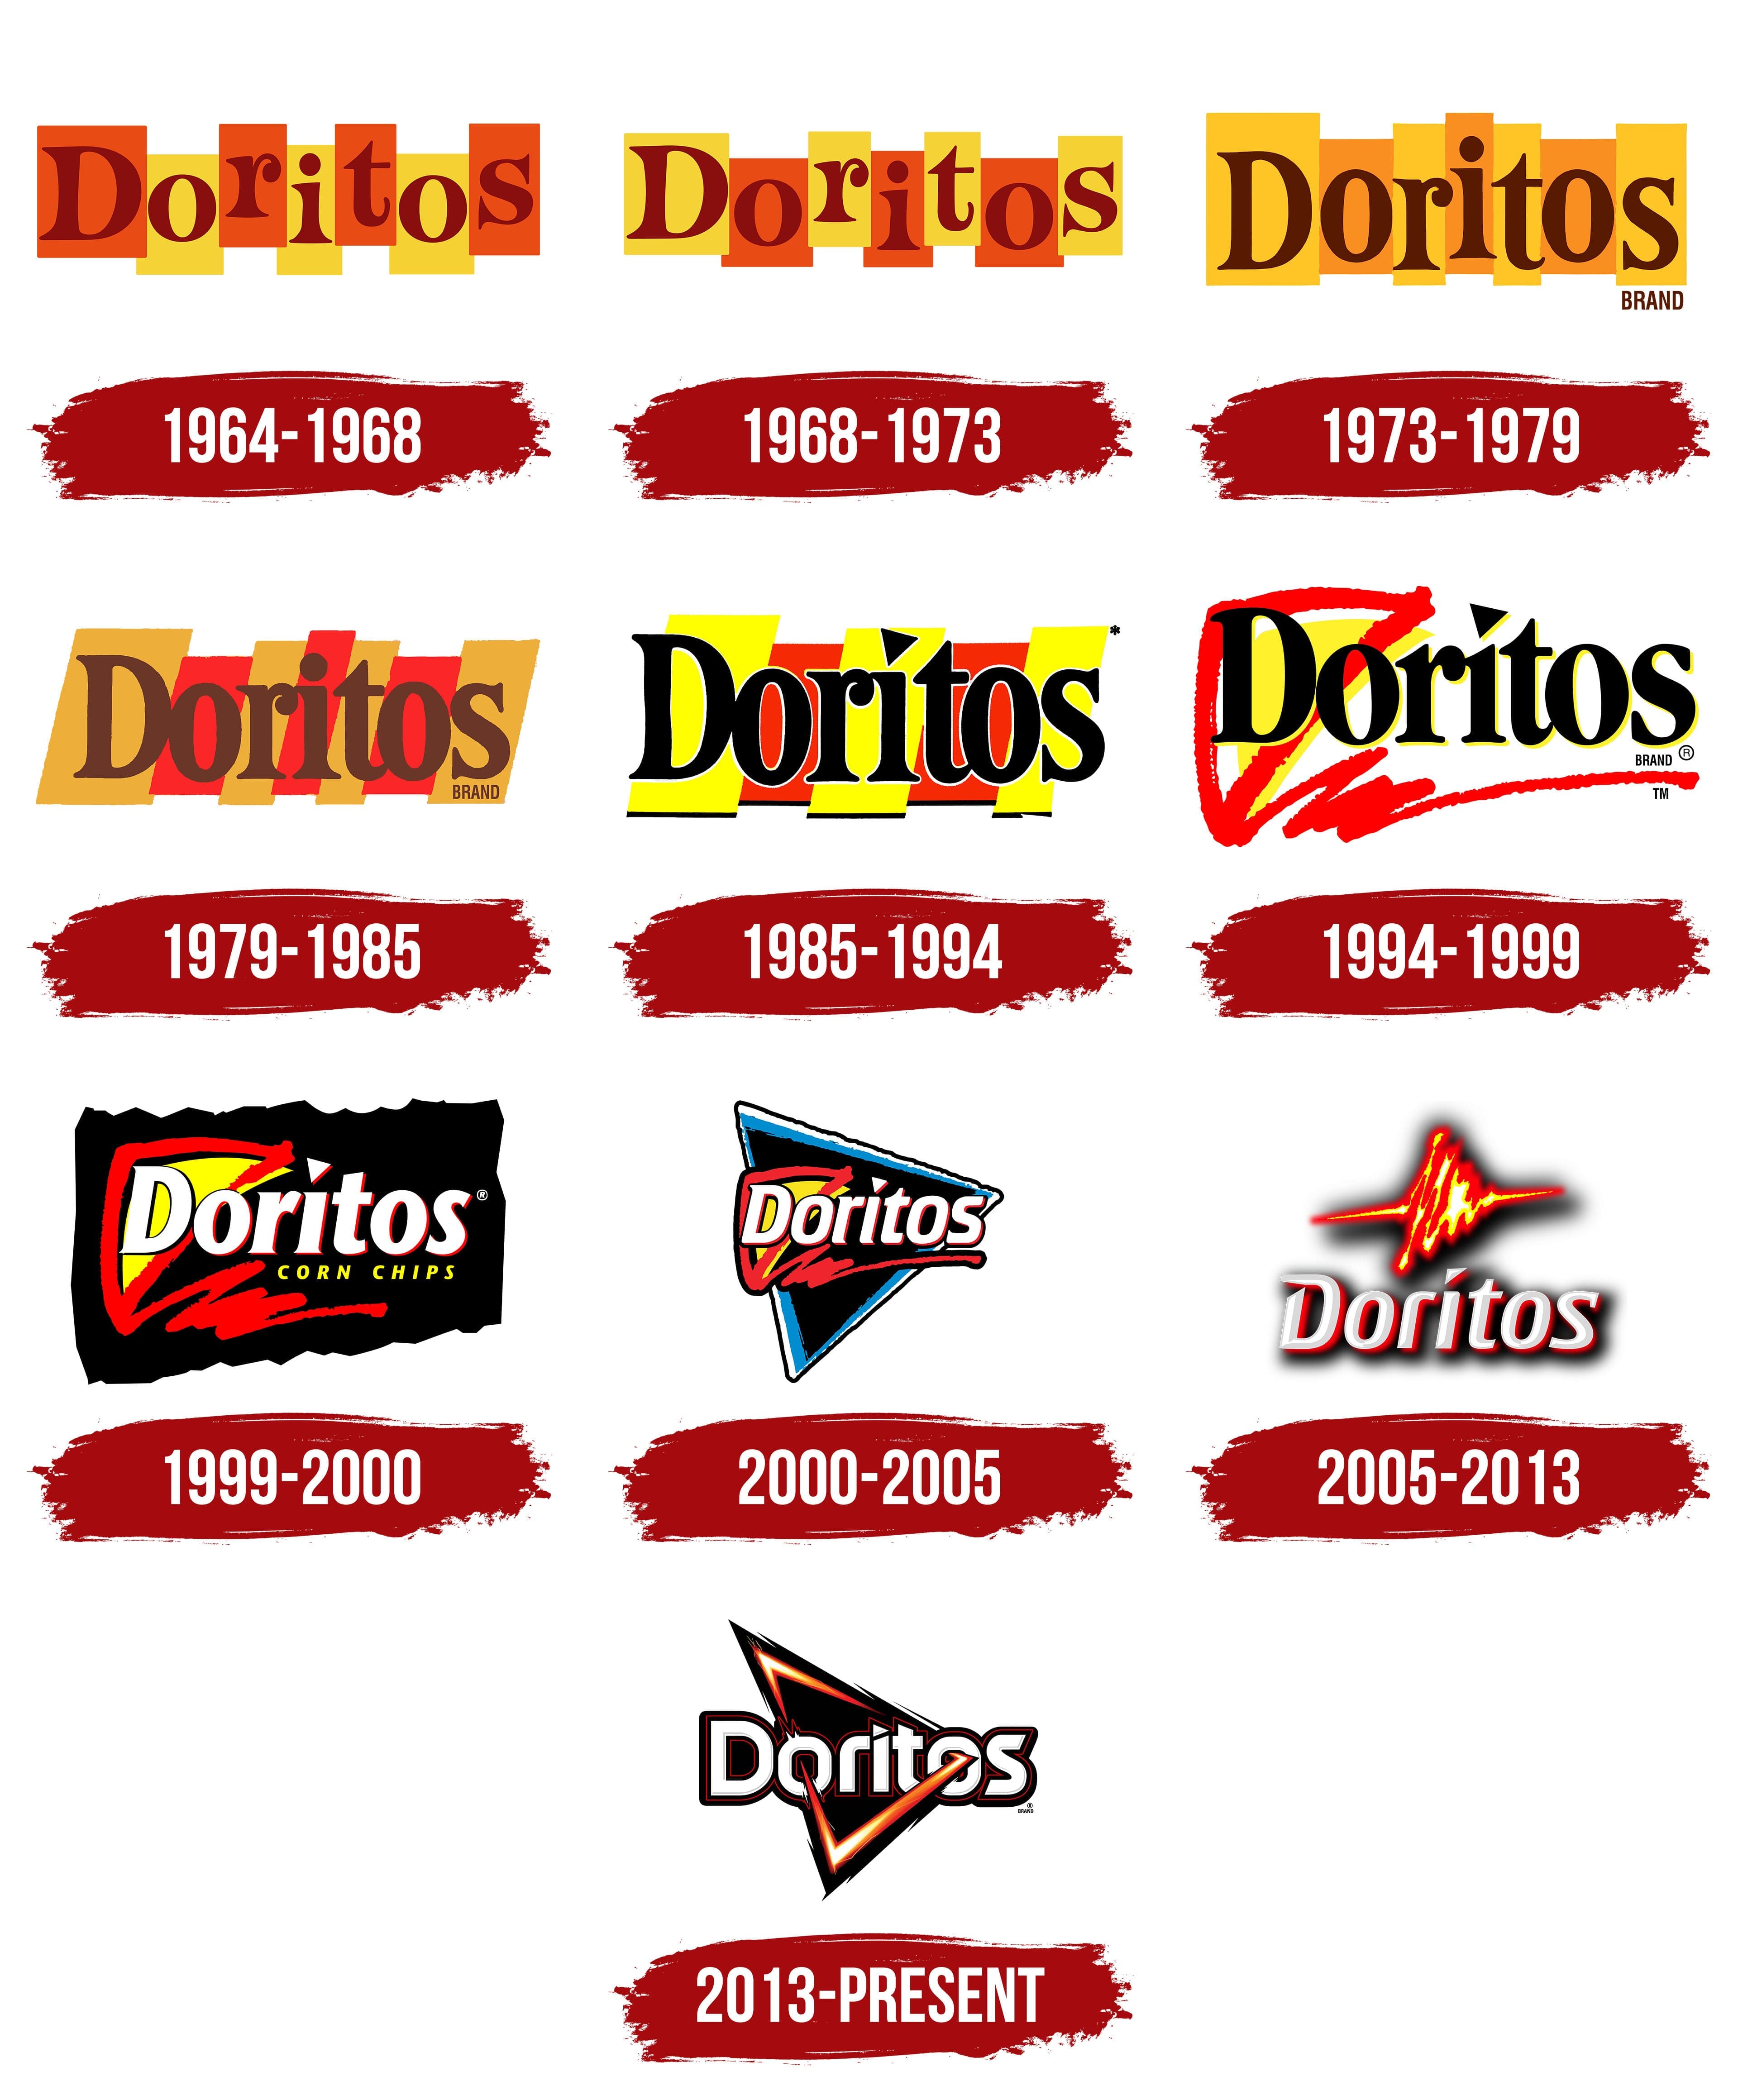 doritos flavors timeline